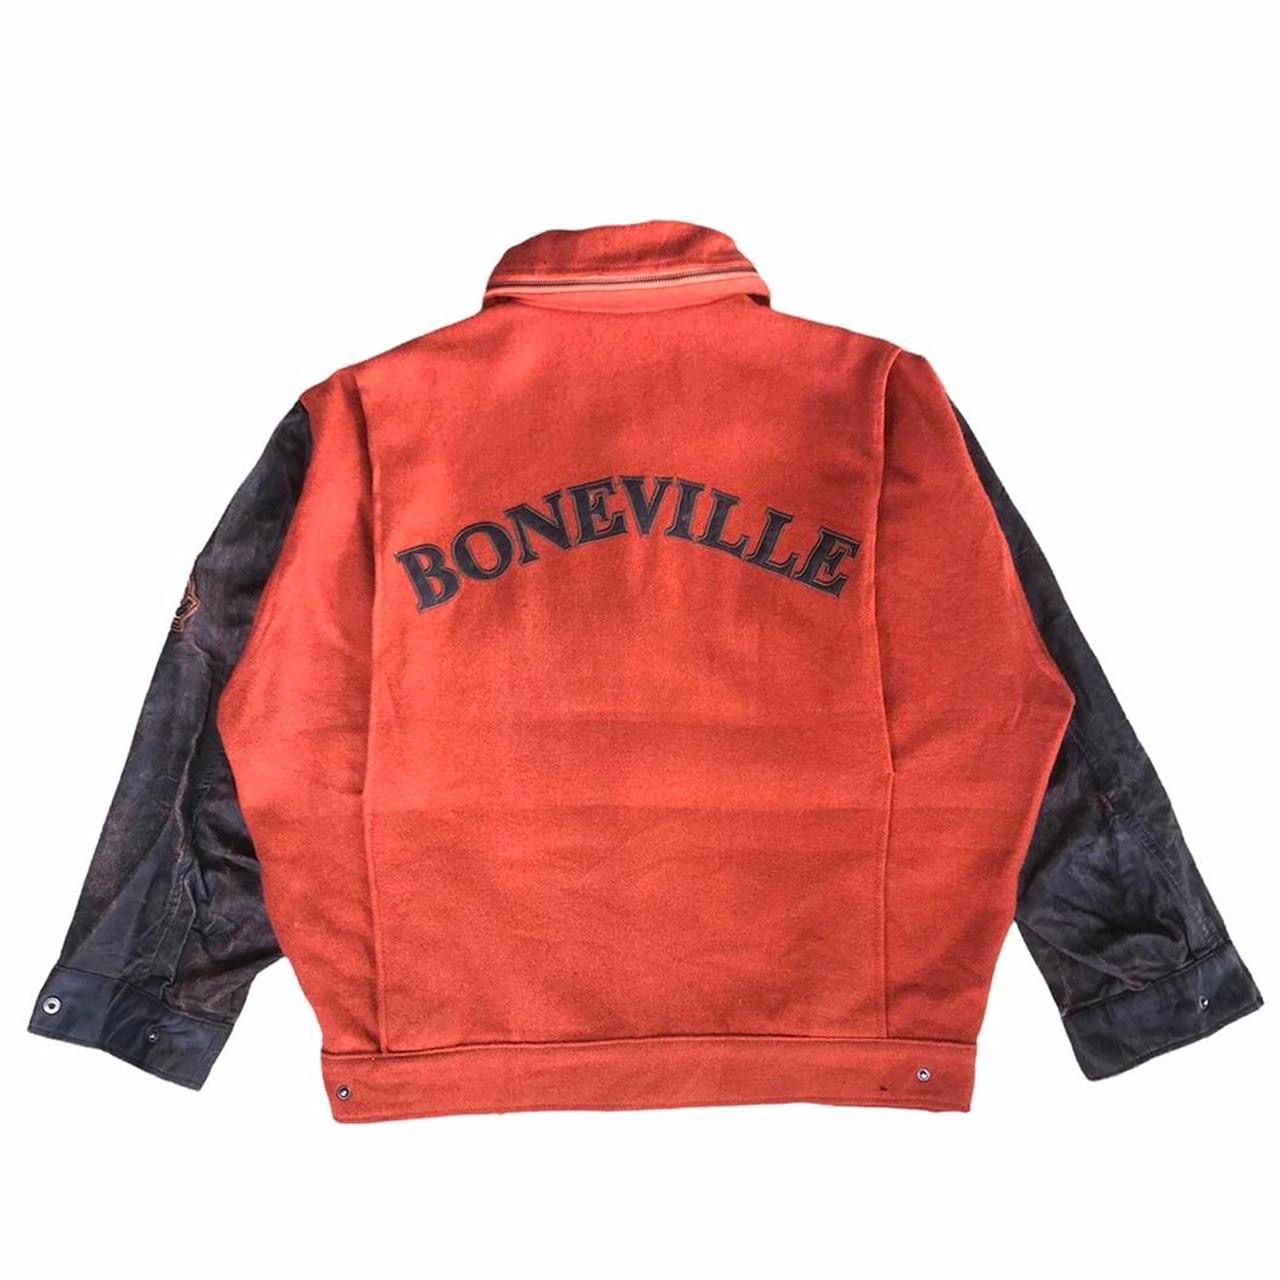 Vintage 80s Boneville x C.P. Company Wool Jacket - 2